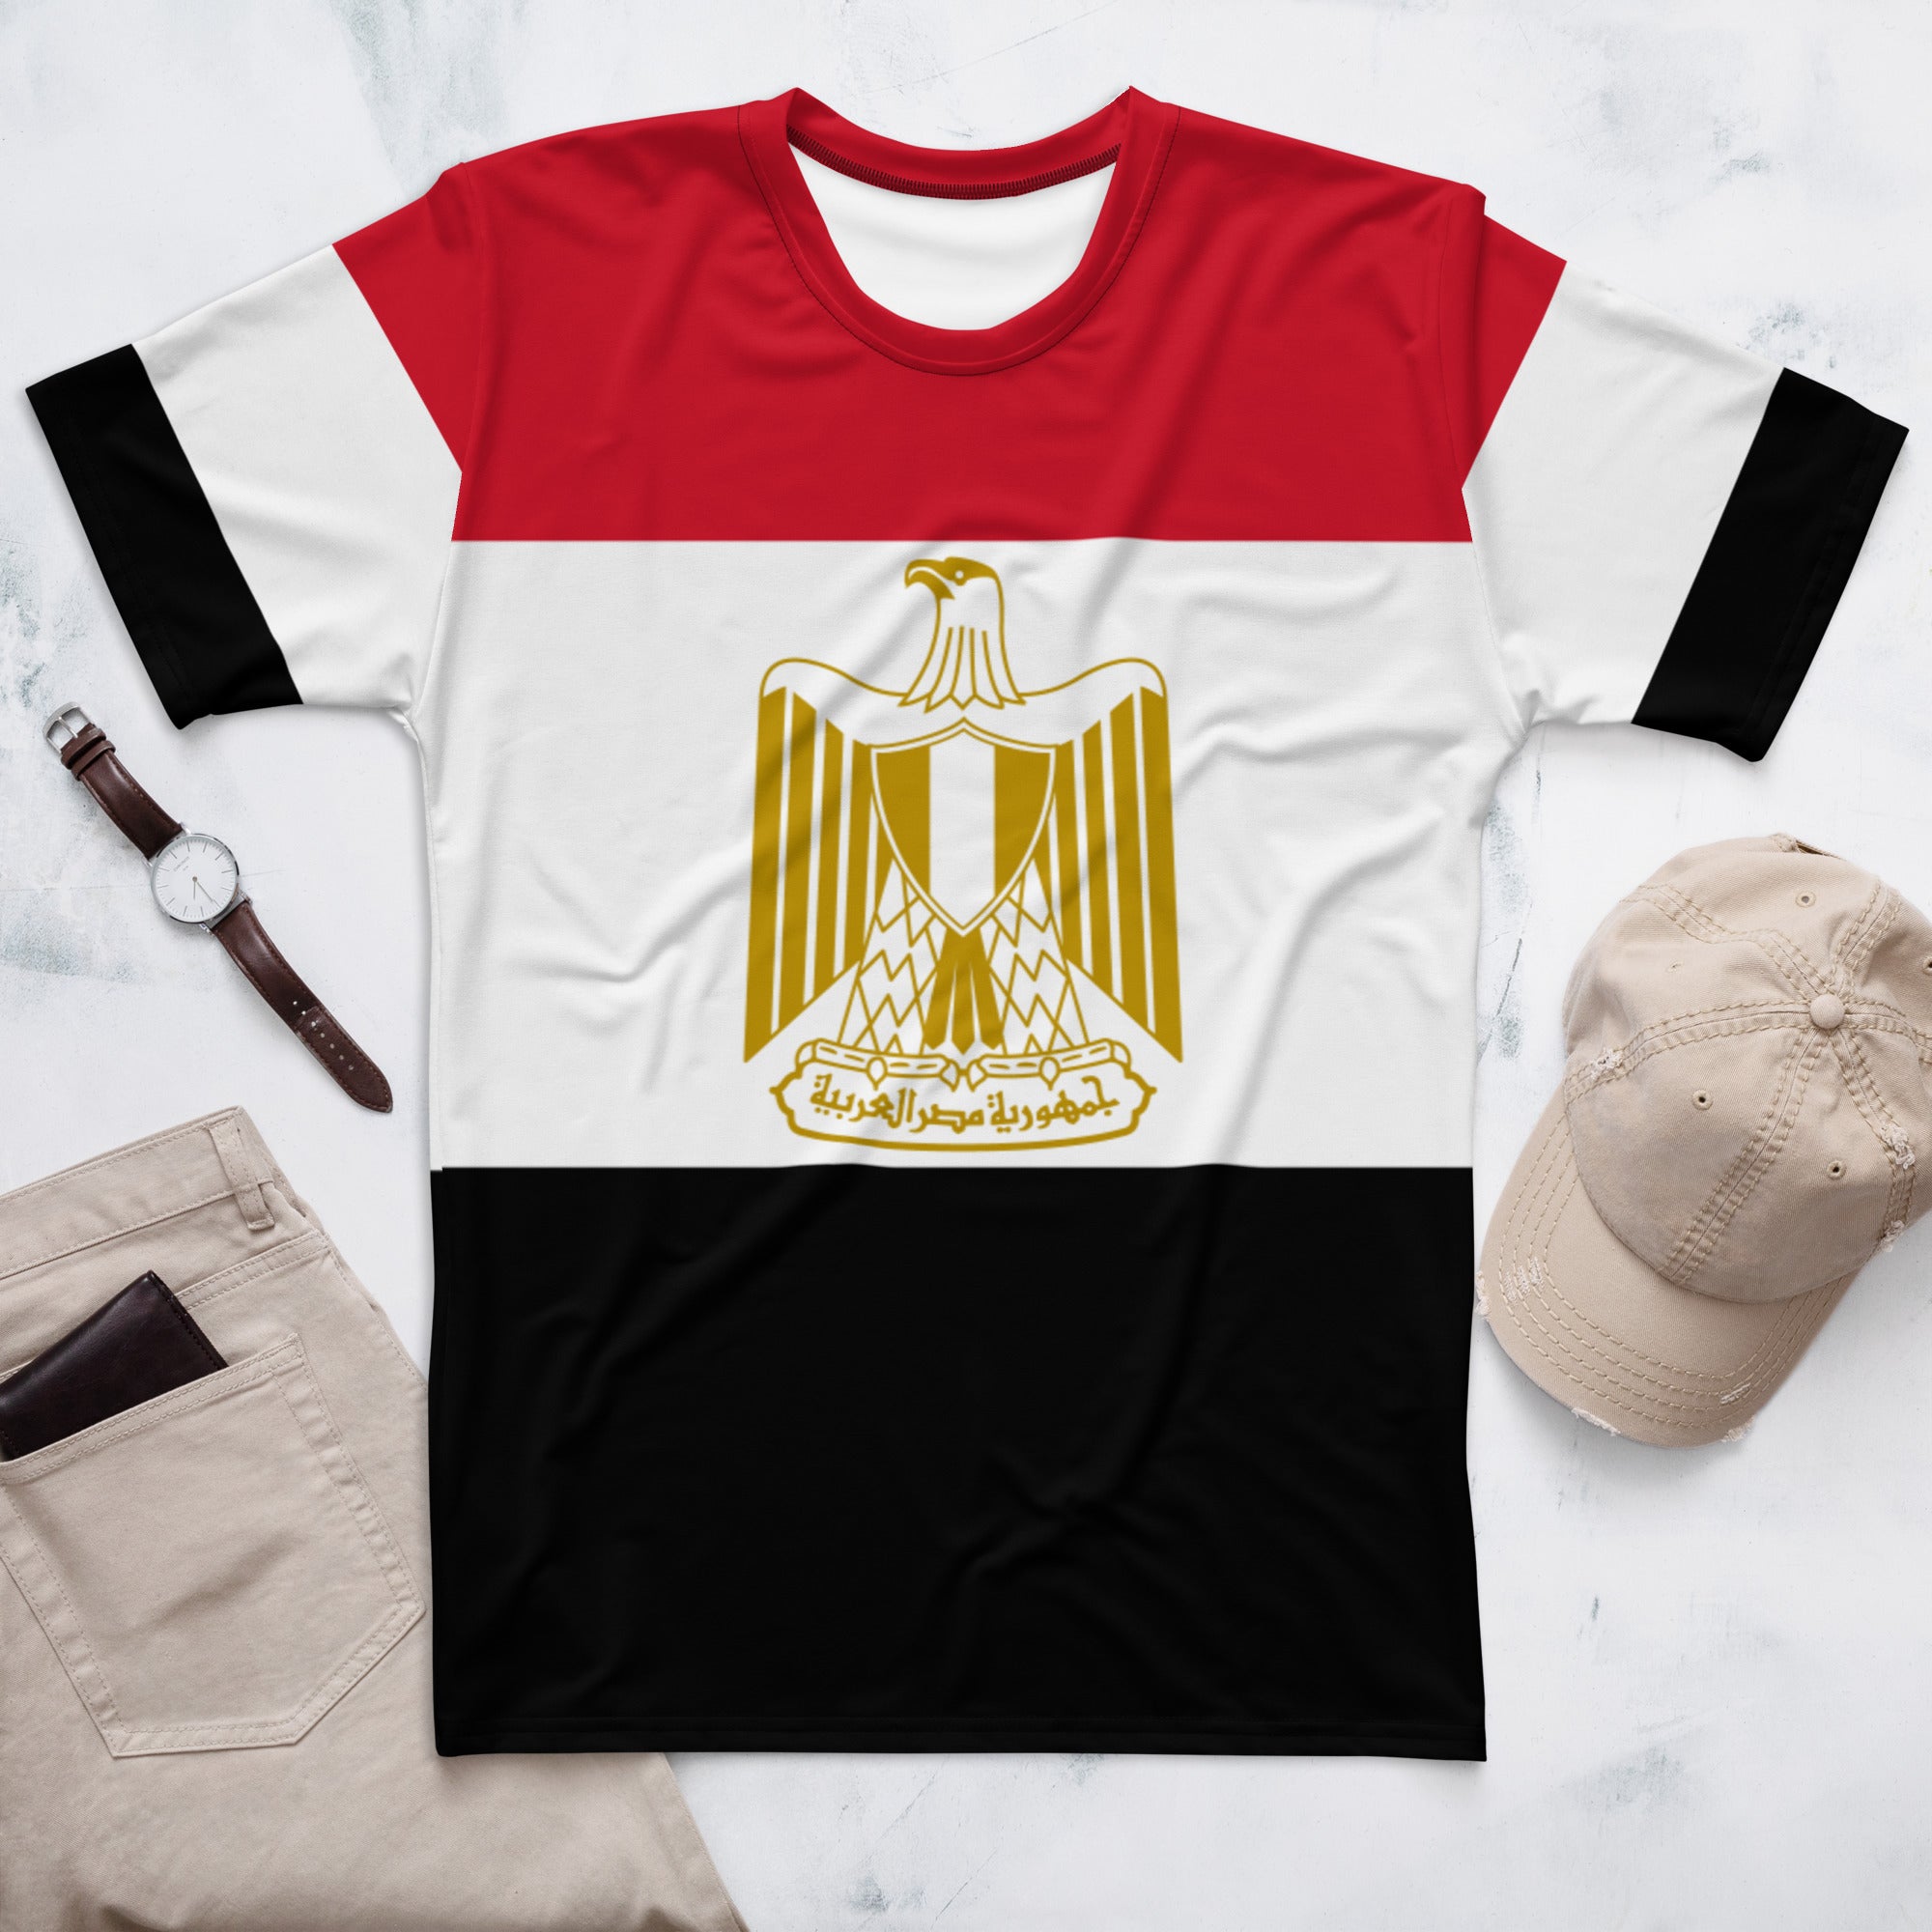 T-shirt Design, Cairo and Egypt Writing Plus the Egyptian Flag